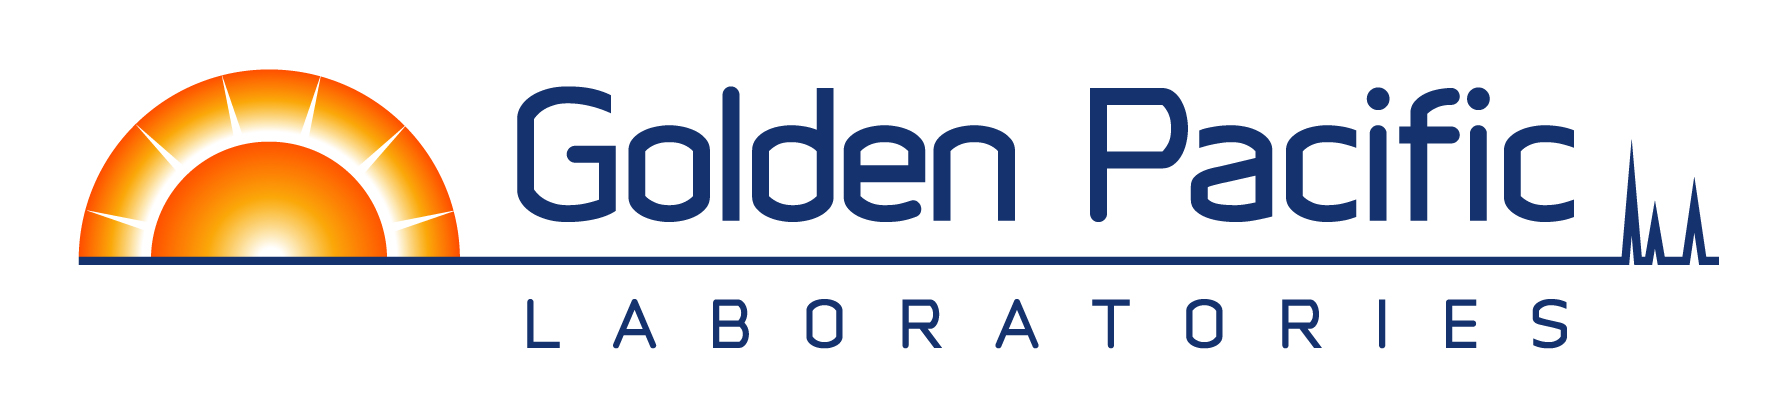 Golden Pacific Laboratories